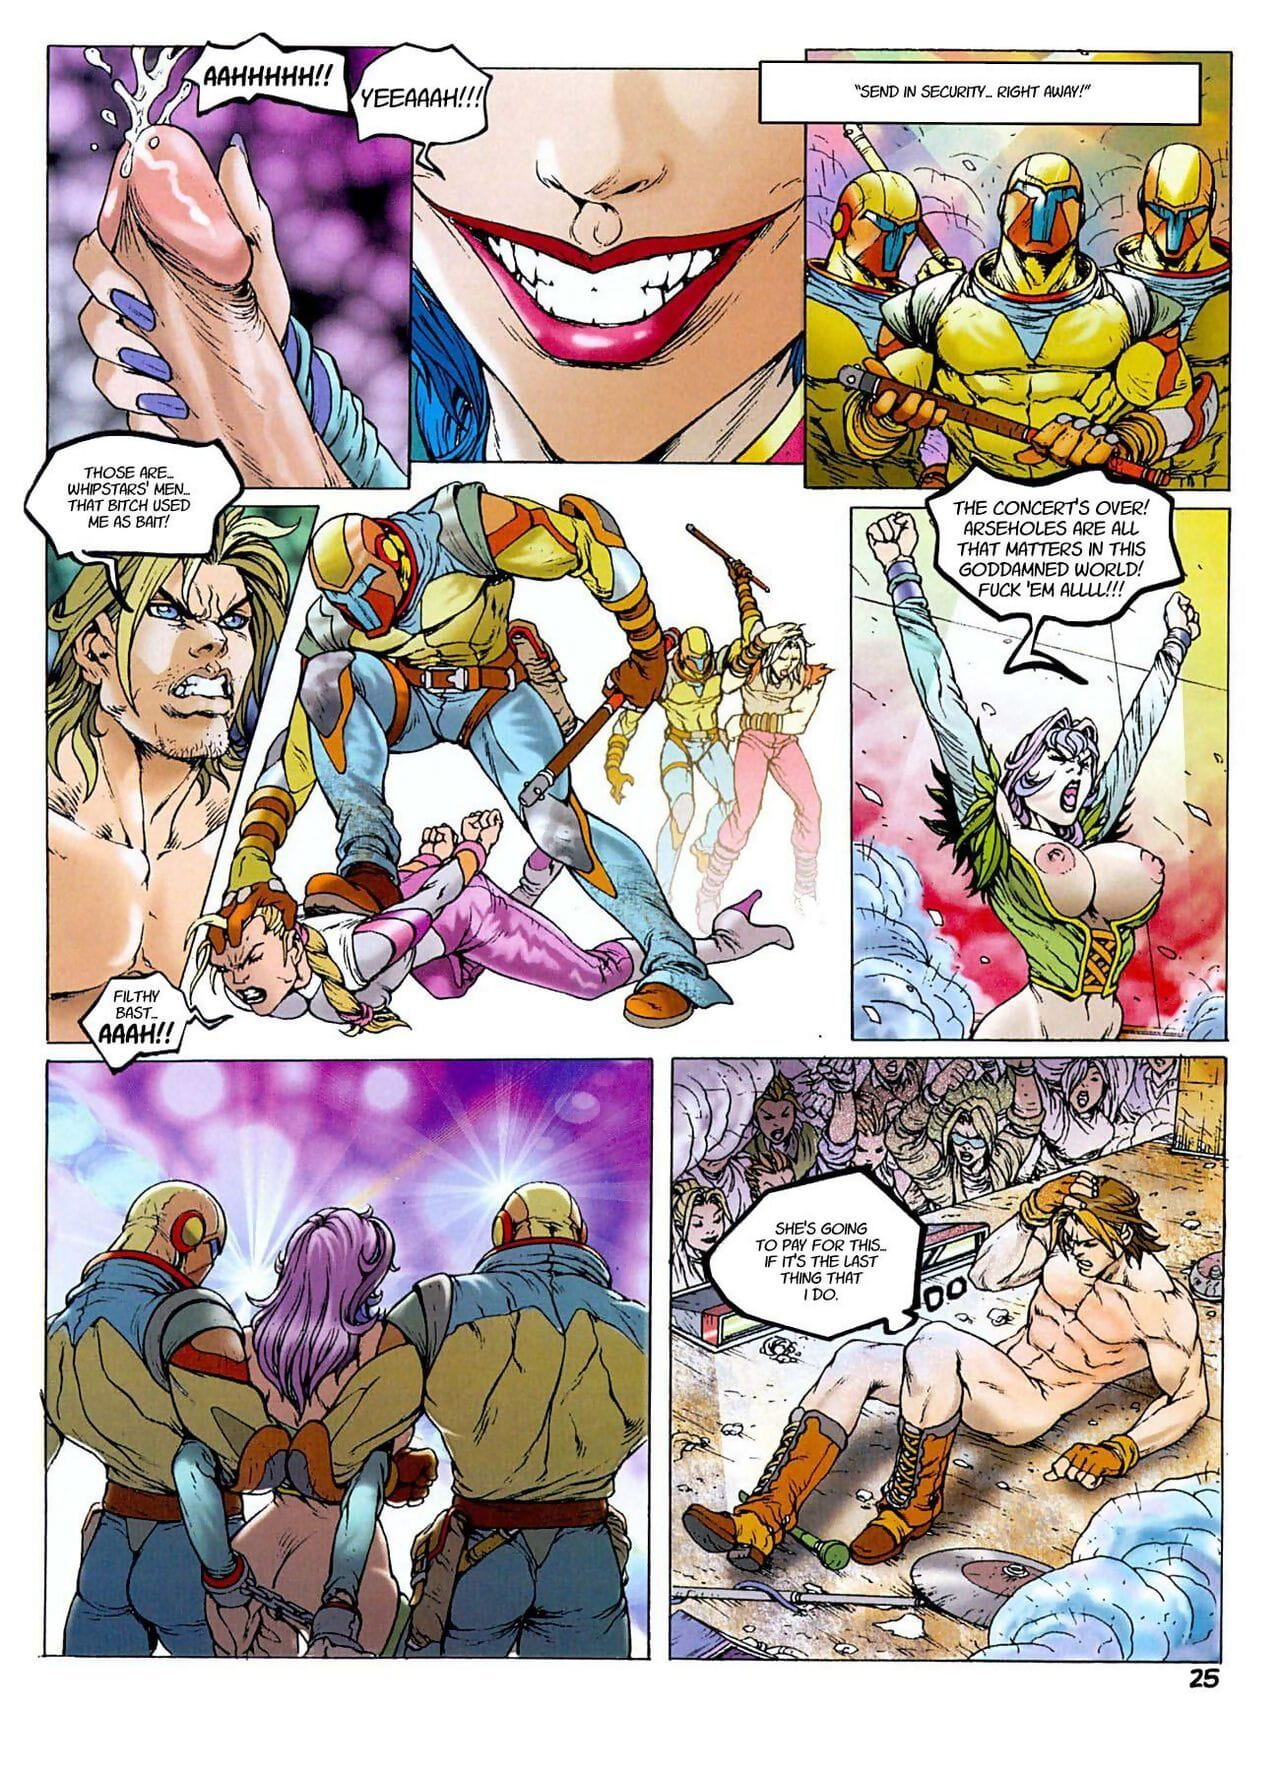 Sexy Cyborg page 1